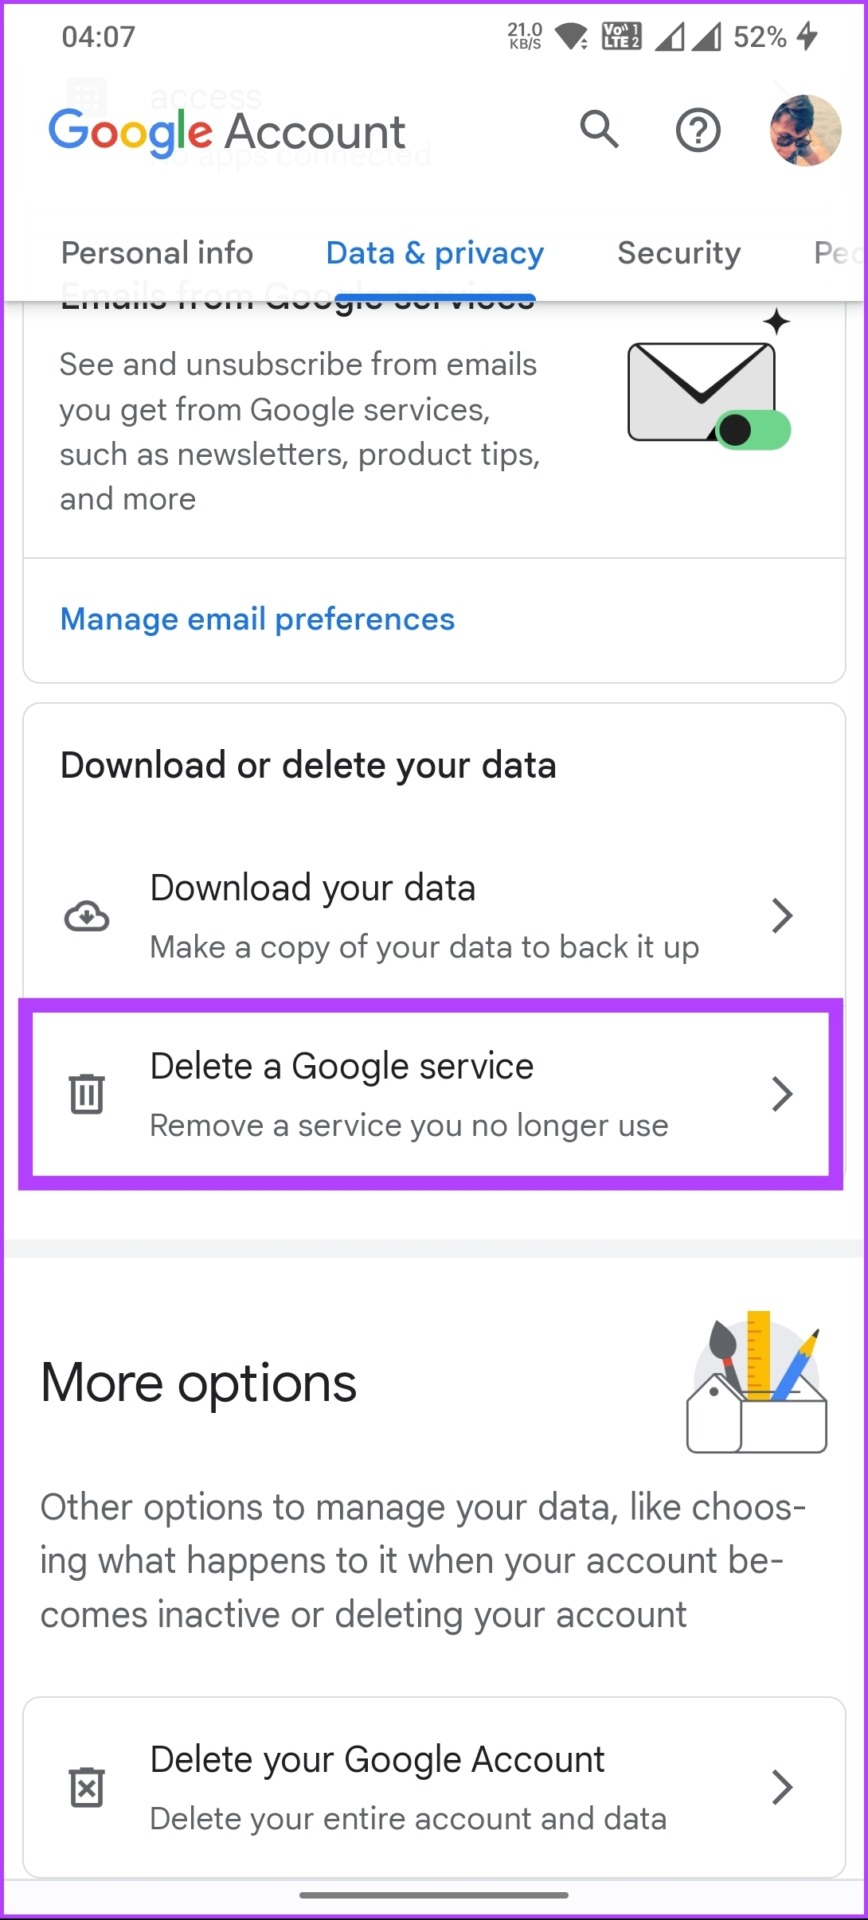 select 'Delete a Google Service'